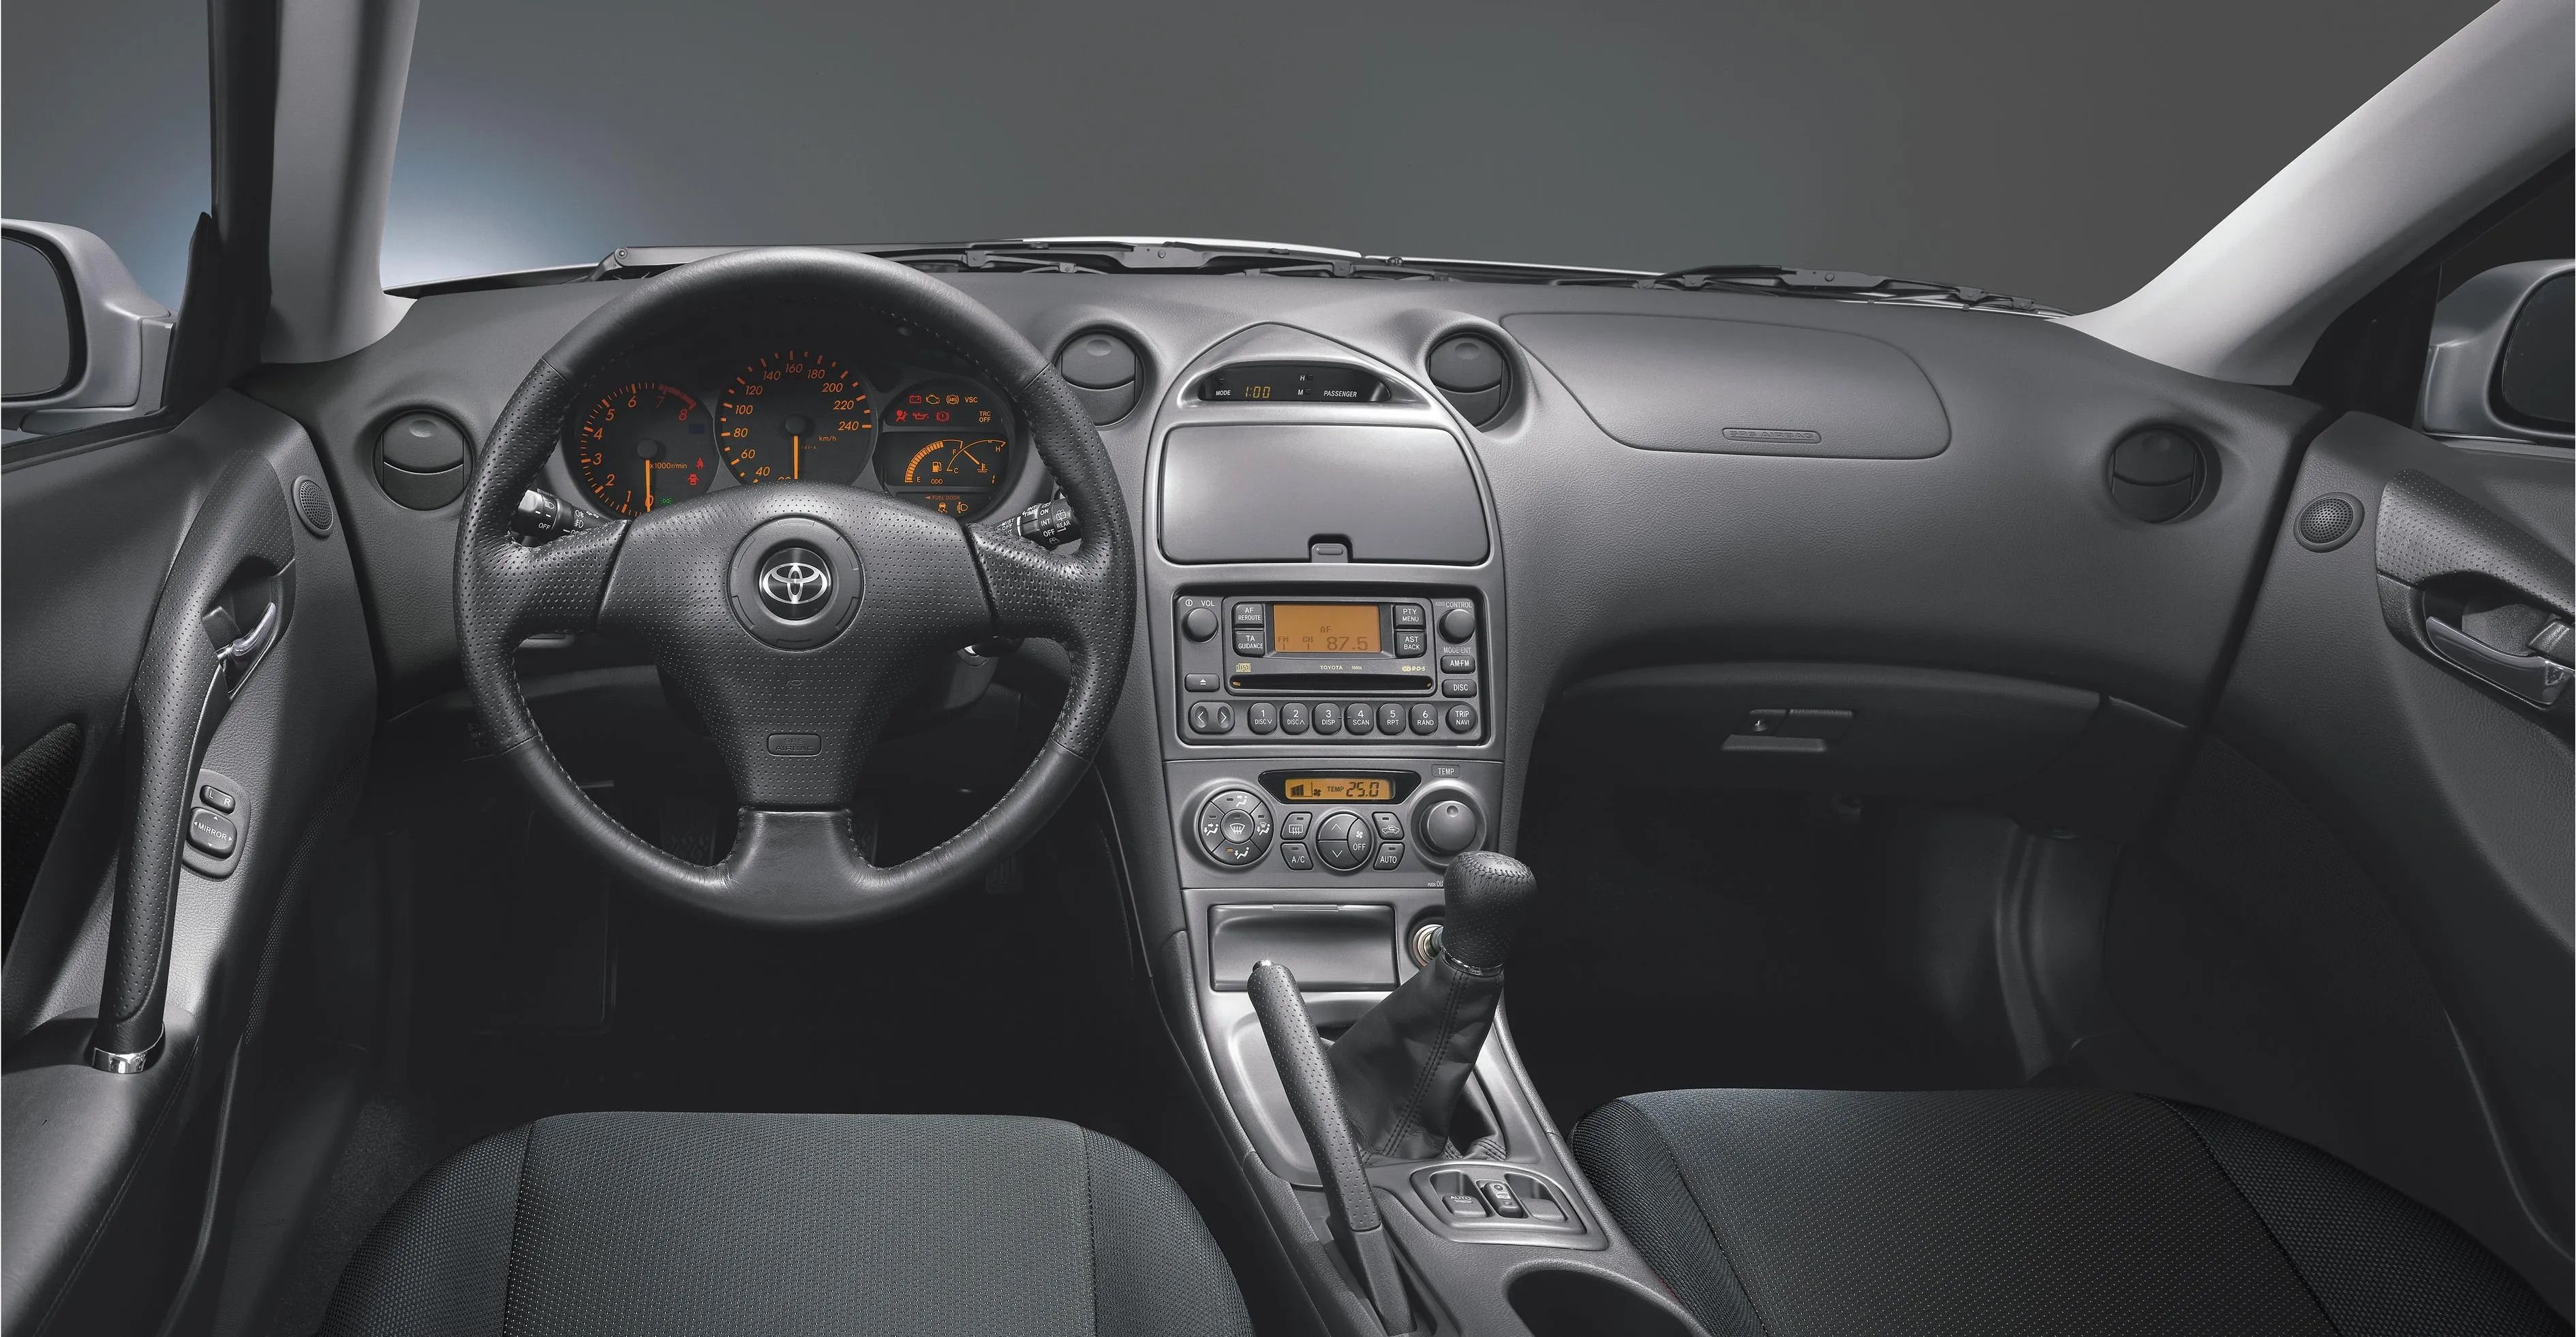 Toyota Celica Performance, Price, and Photos